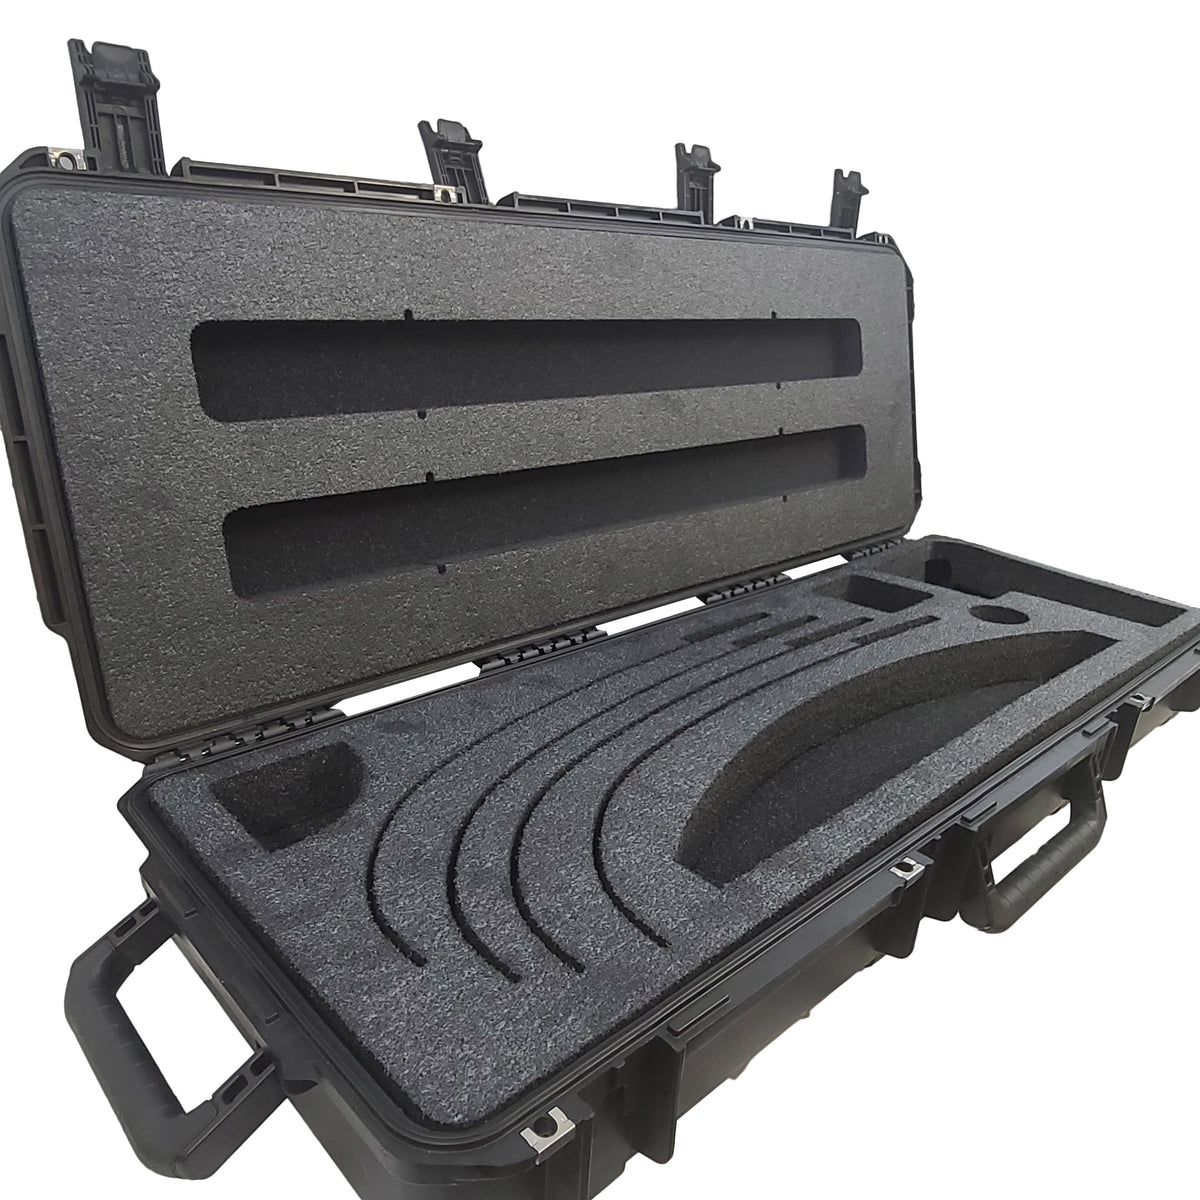 SKB Case 3i-6018 Foam Insert for 88 Note Keyboard (Foam ONLY) — Cobra Foam  Inserts and Cases